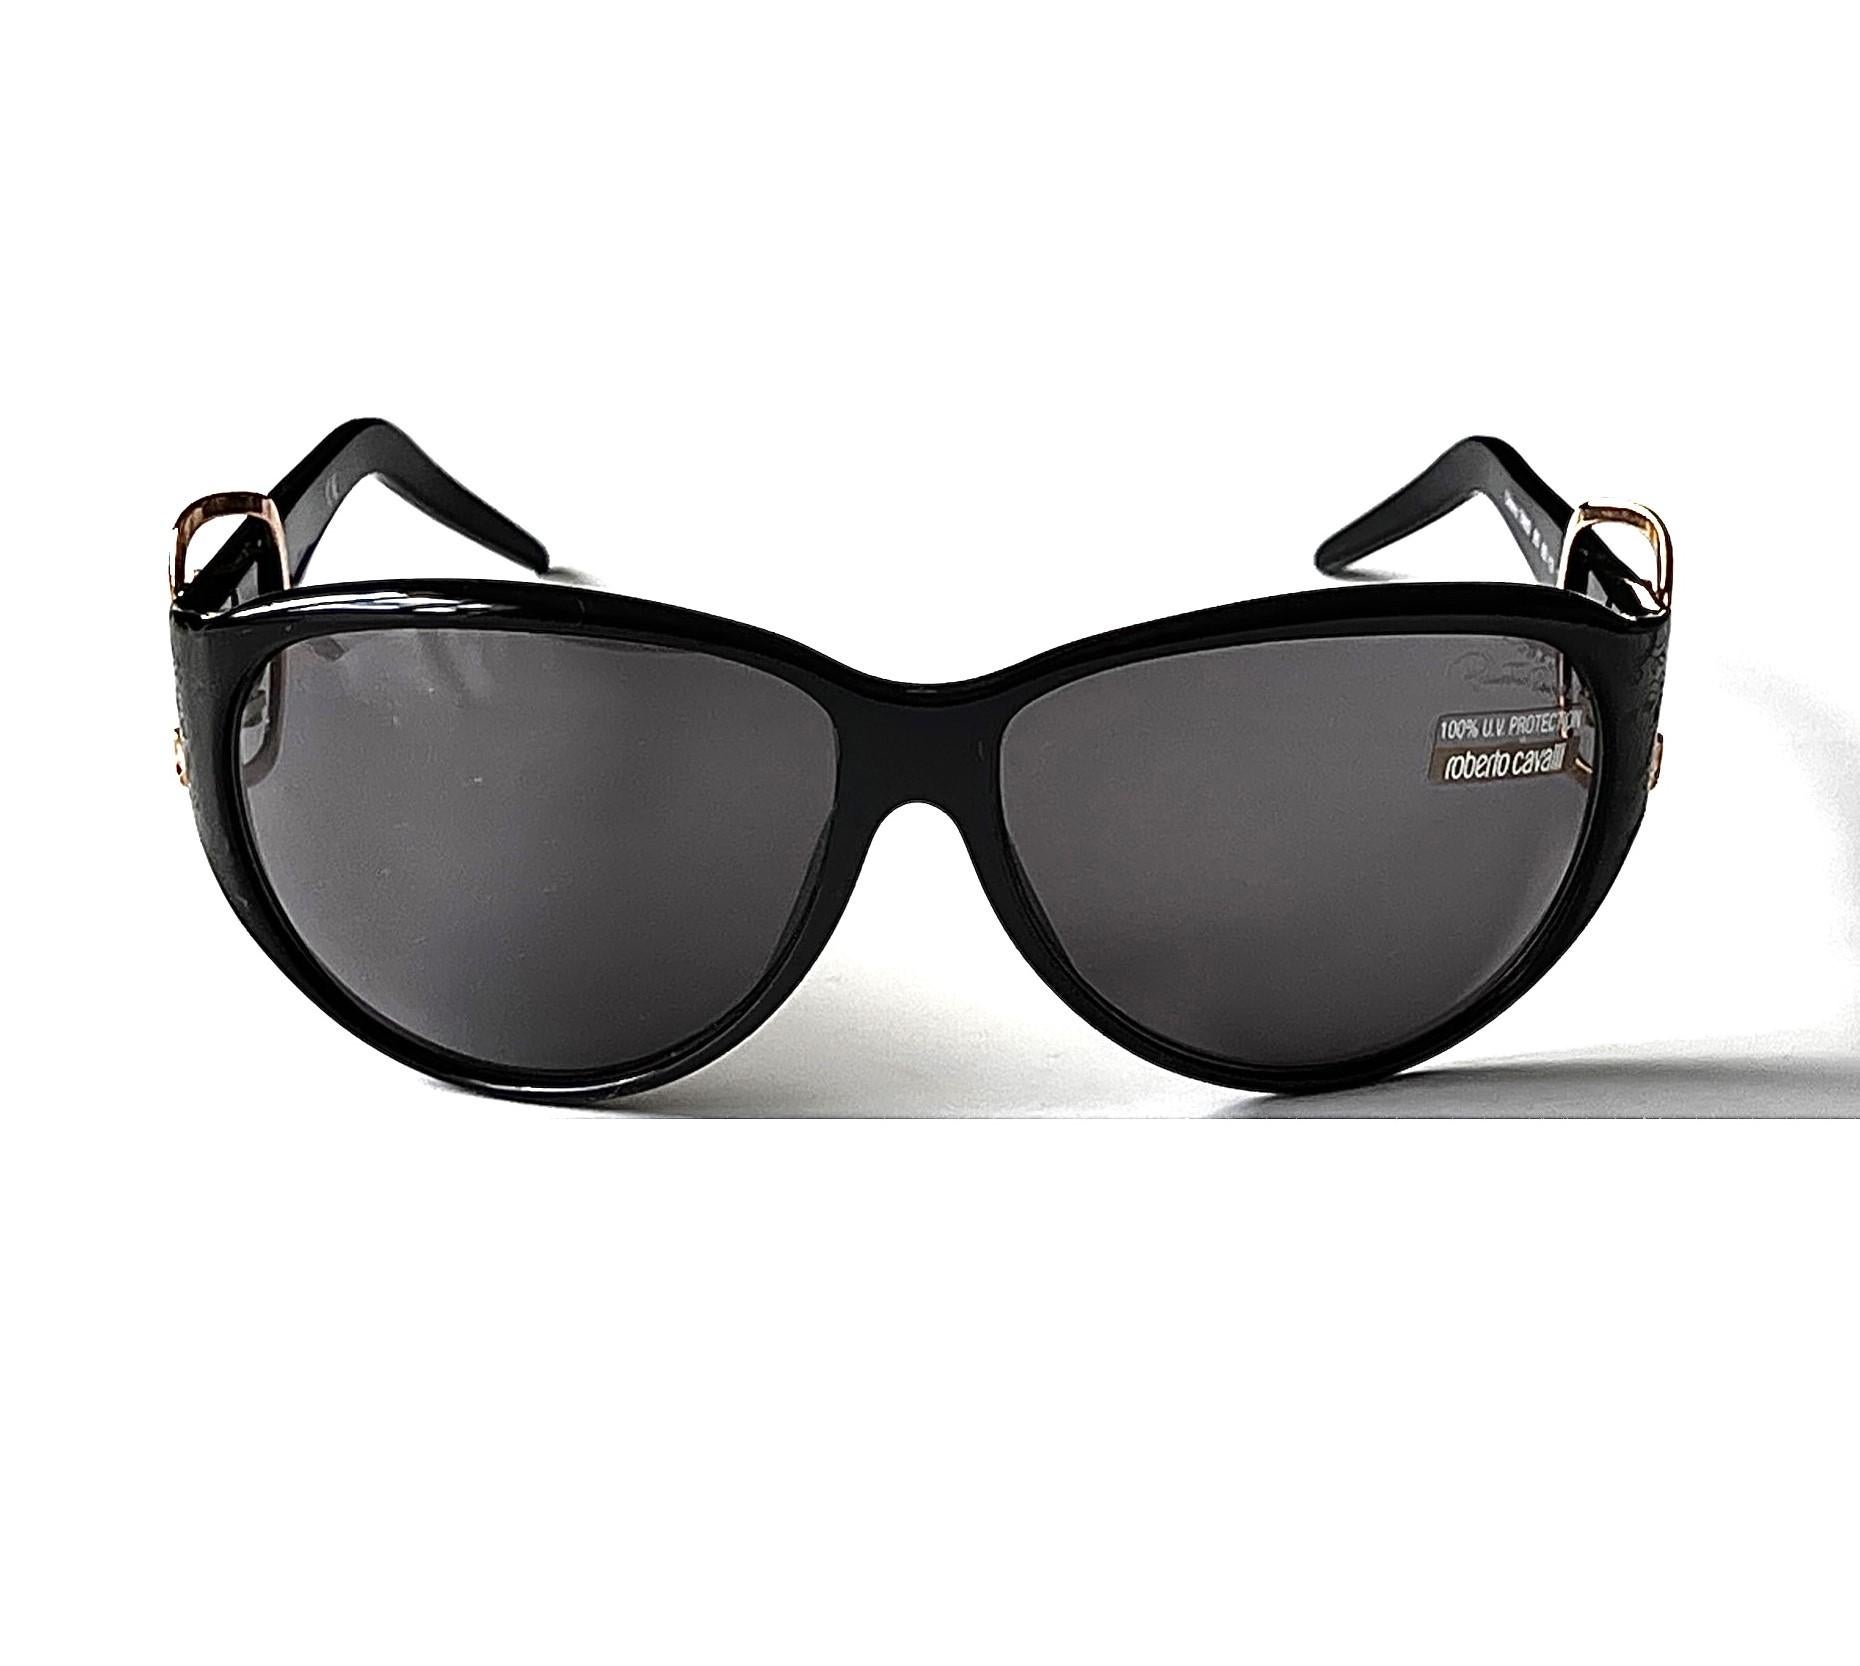 Women's sunglasses Roberto Cavalli art. URANO 360S col. B5 (Made in Italy)
Guaranteed 100%  
Authentic Roberto Cavalli Sunglasses
Made in Italy
Condition: New, vintage, never worn, unworn, with tags
Model URANO 360S 
Color B5
Size: Lens-63 Bridge-13